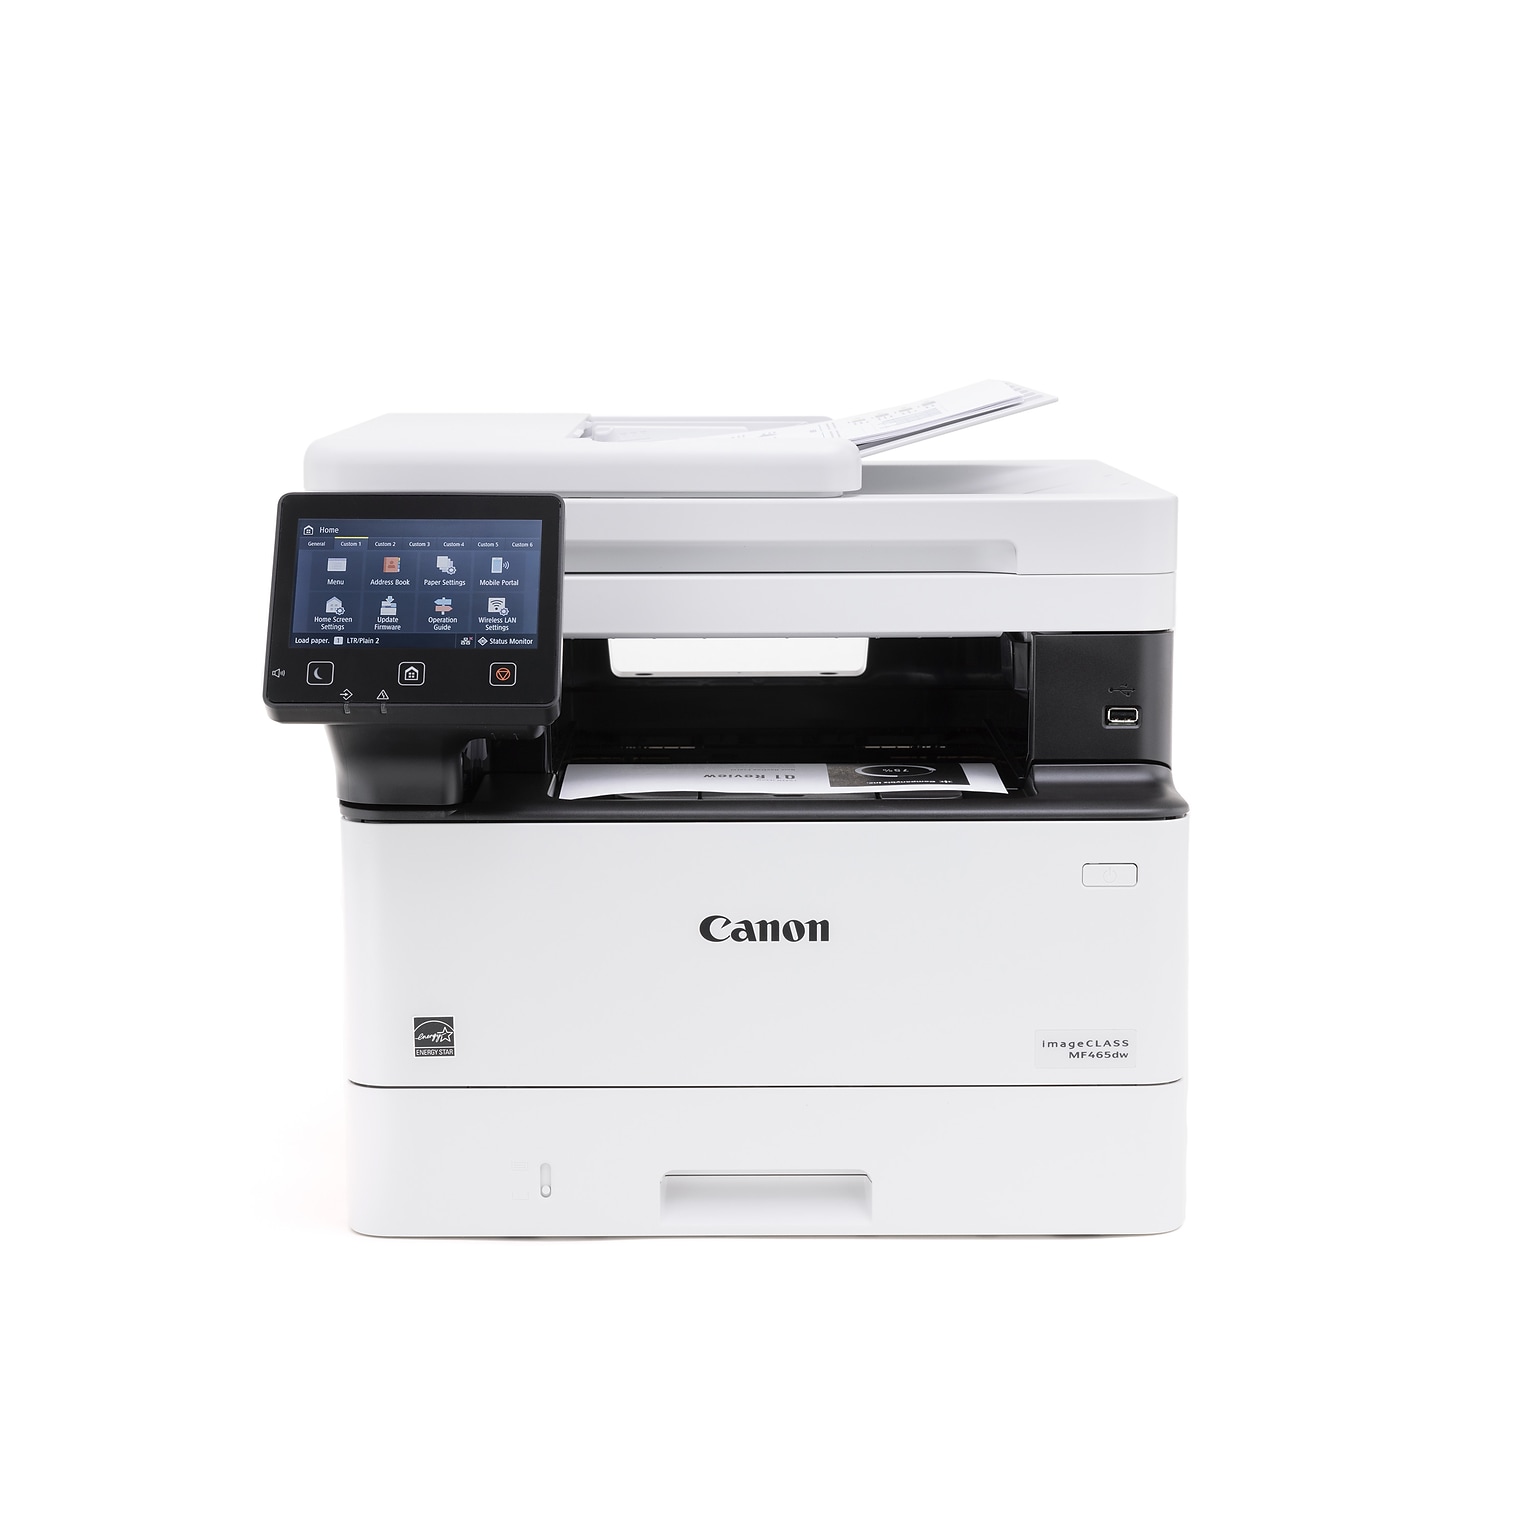 Canon ImageCLASS MF465dw Wireless Black & White All-in-One Laser Printer (5951C005)